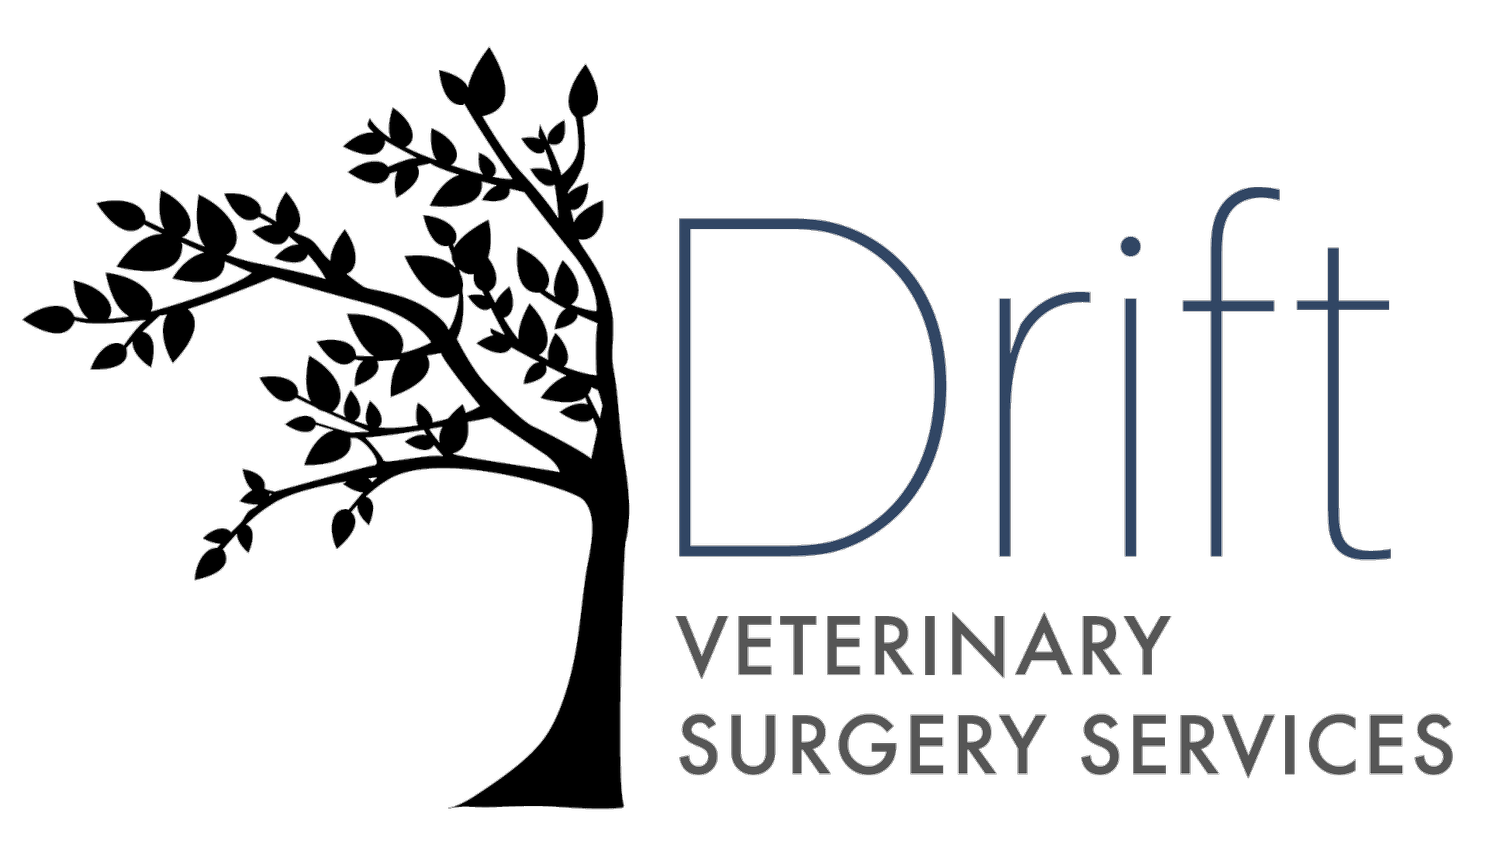 Drift Veterinary Surgery Services